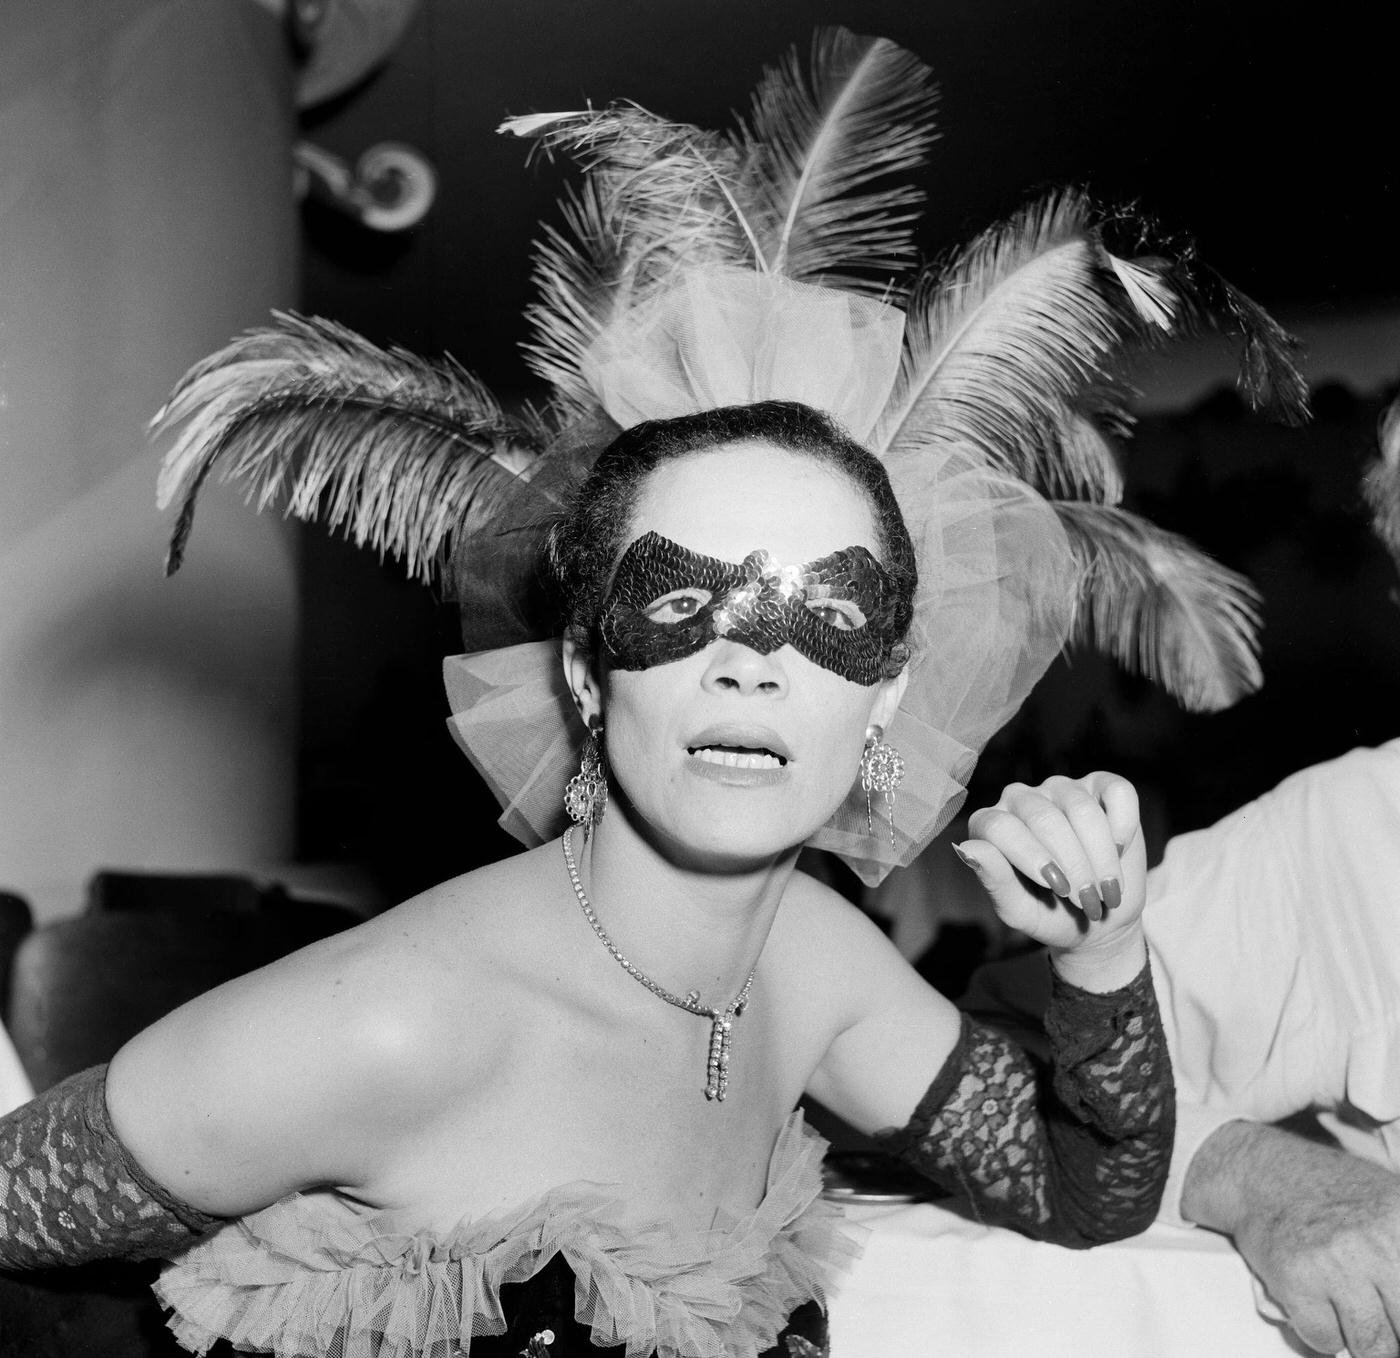 Woman in Costume Posing, Rio Carnival 1953